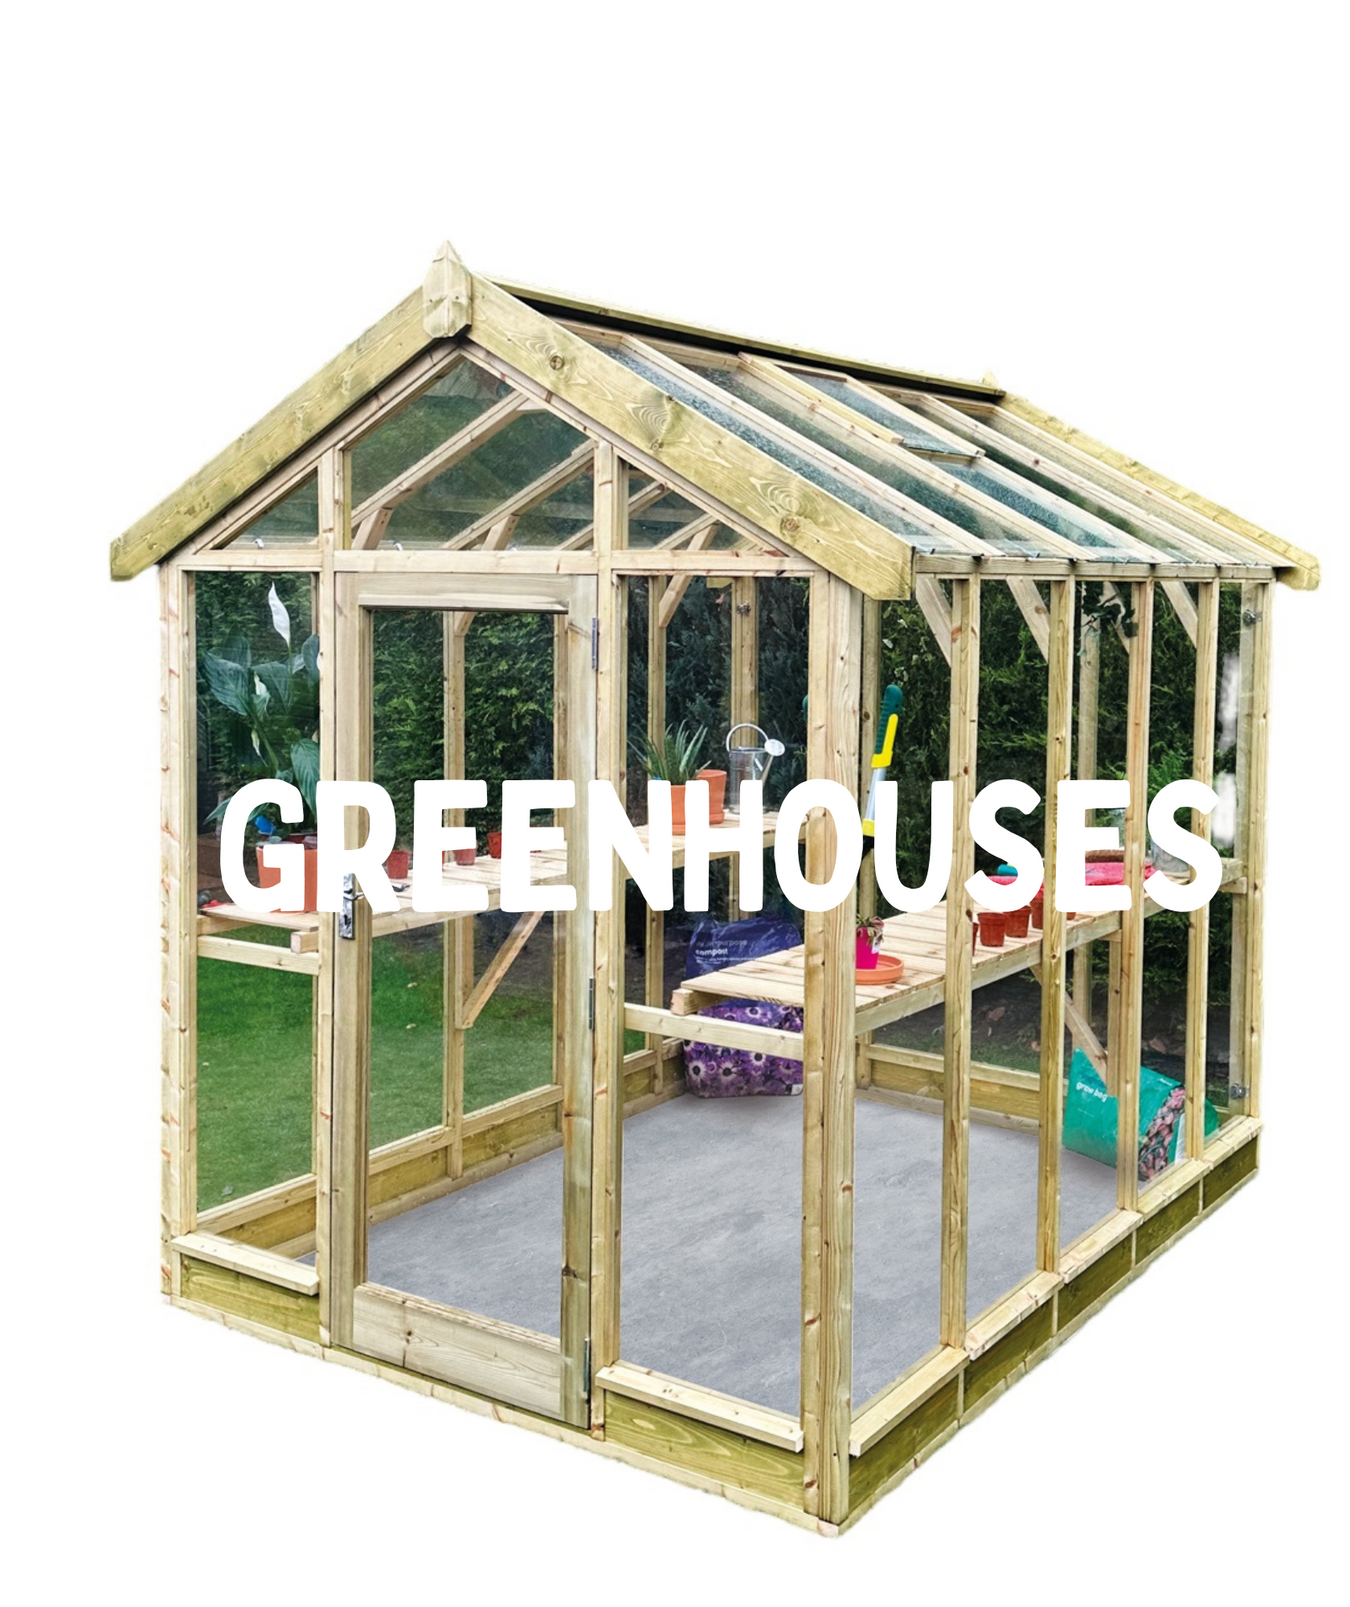 Coppice Collection Greenhouses - Ashdown Garden Buildings - Garden Center Near Me West Sussex